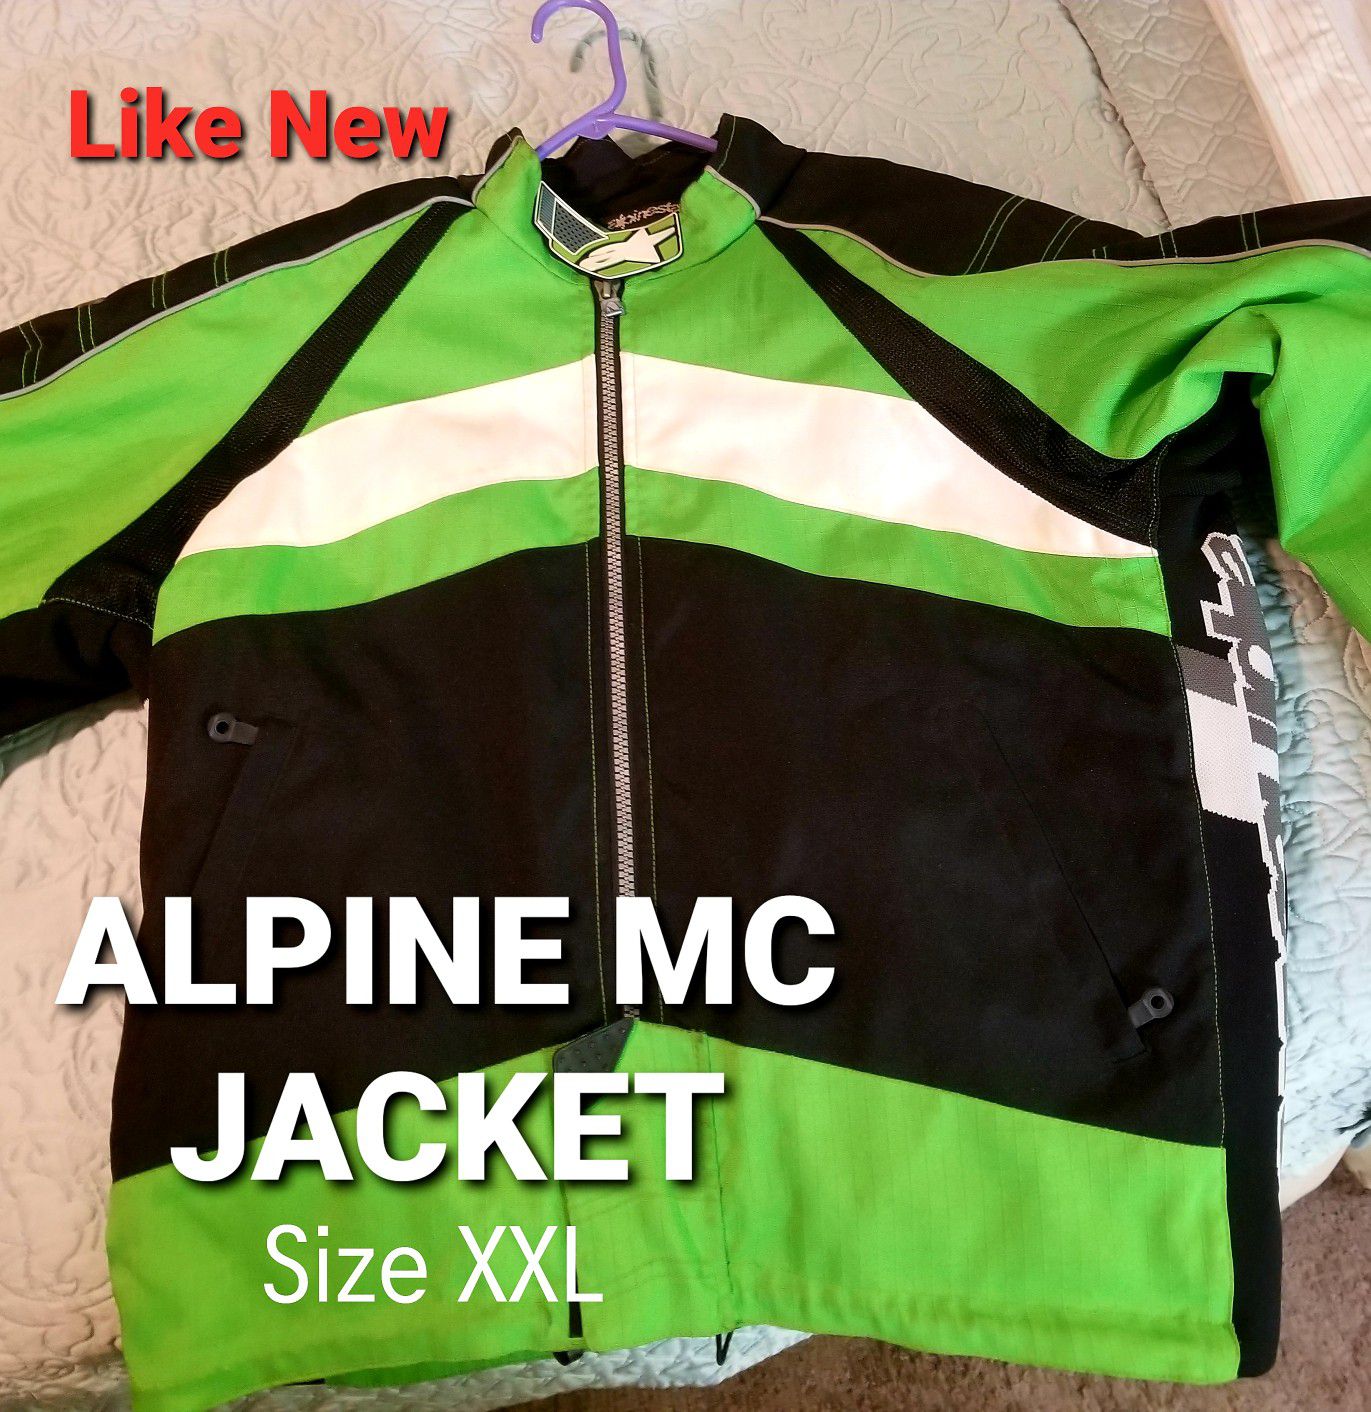 ALPINE MC JACKET